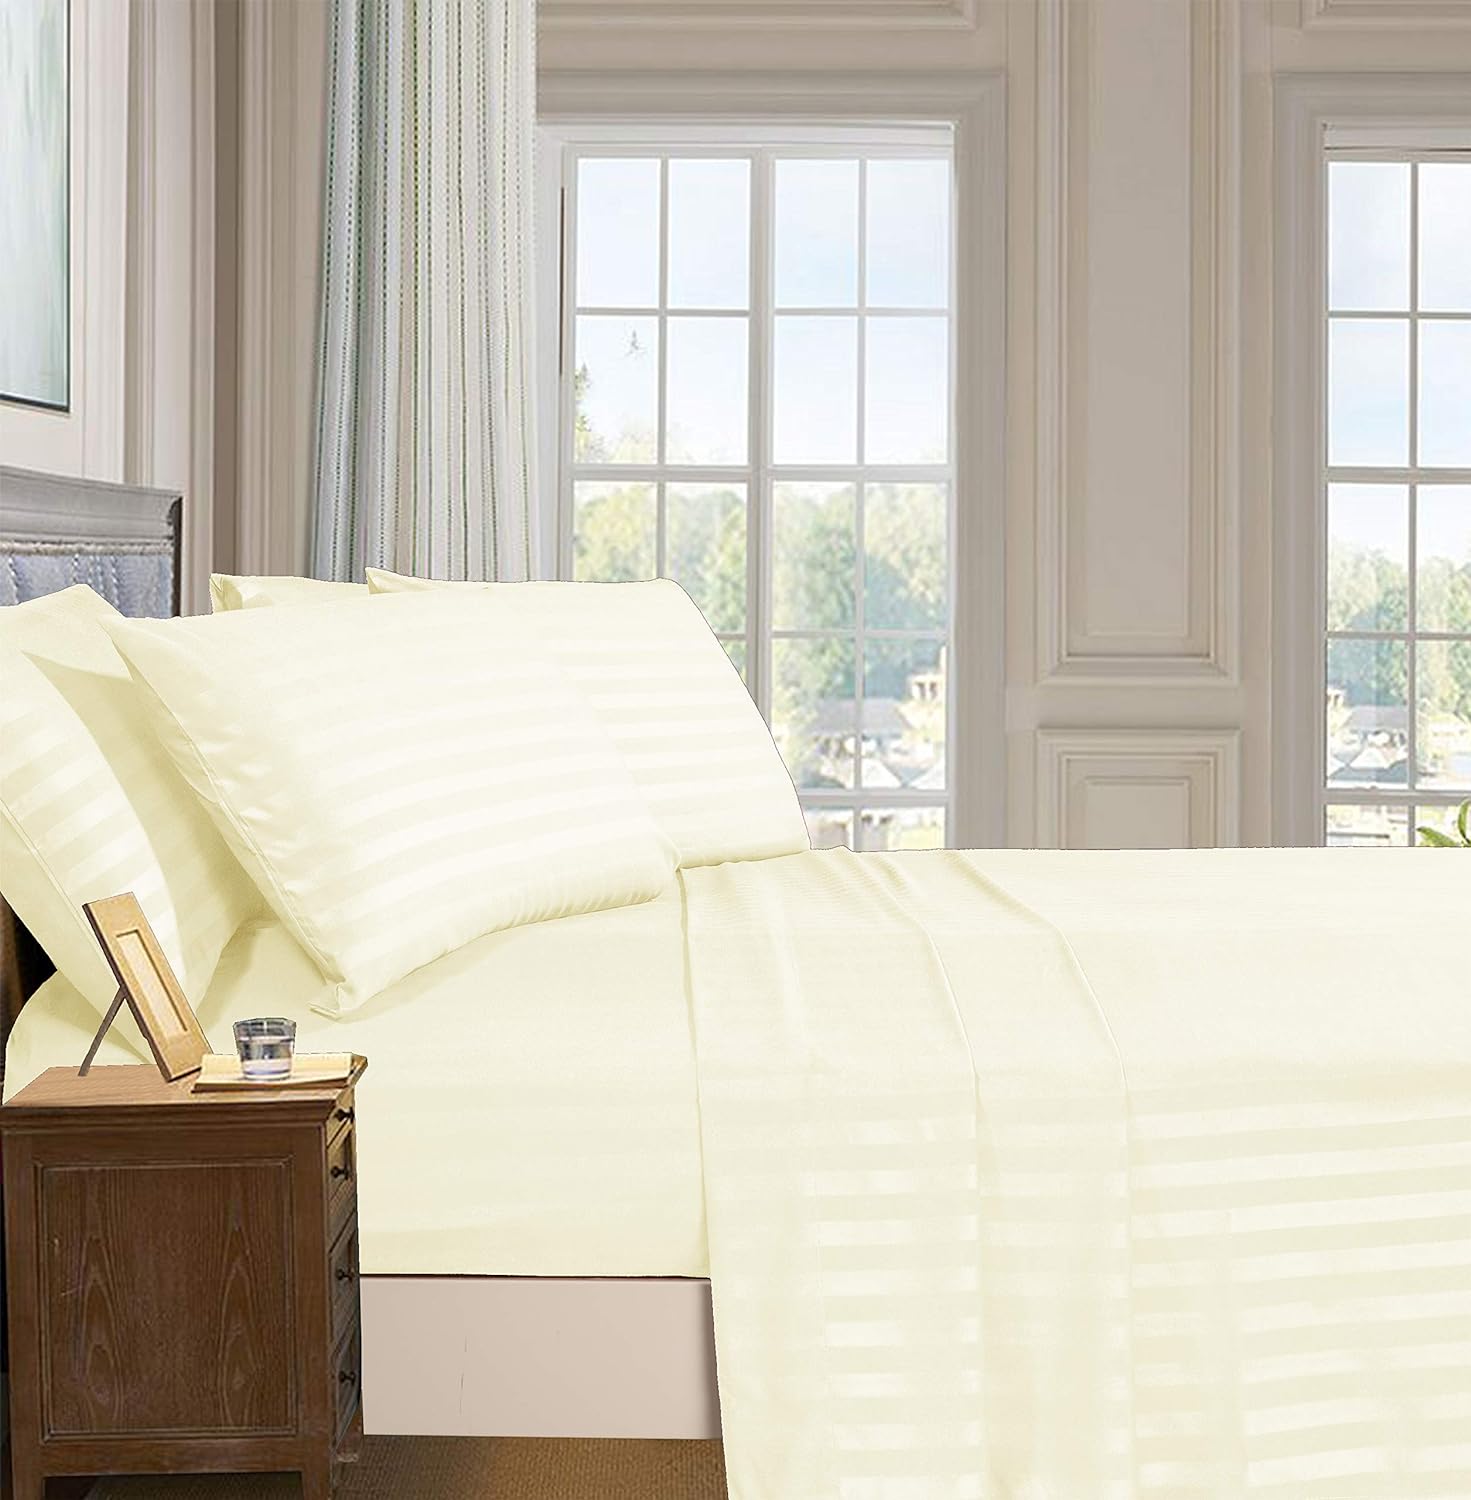 Satin Stripe Double Bed Sheet Off White Colour